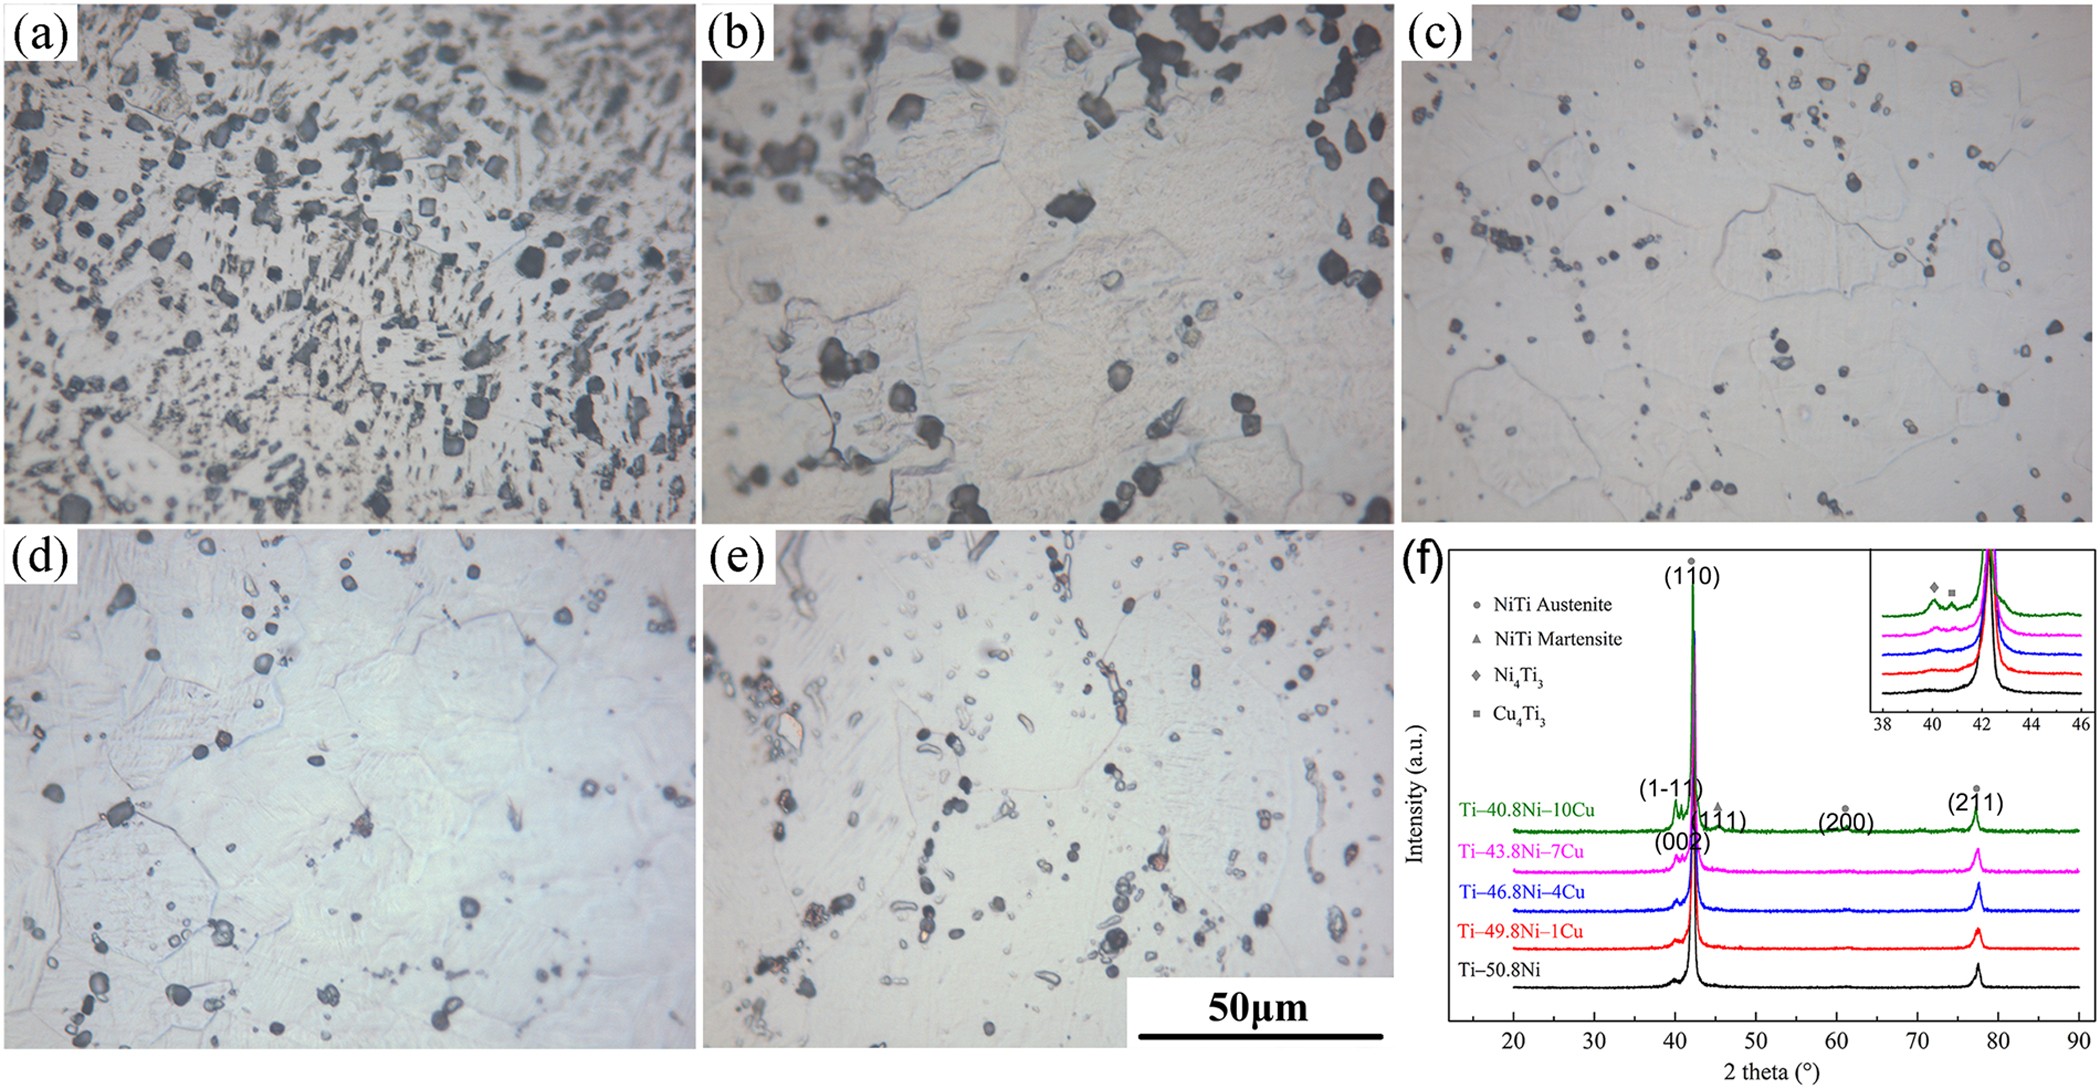 Design and development of novel antibacterial Ti-Ni-Cu shape memory alloys  for biomedical application | Scientific Reports